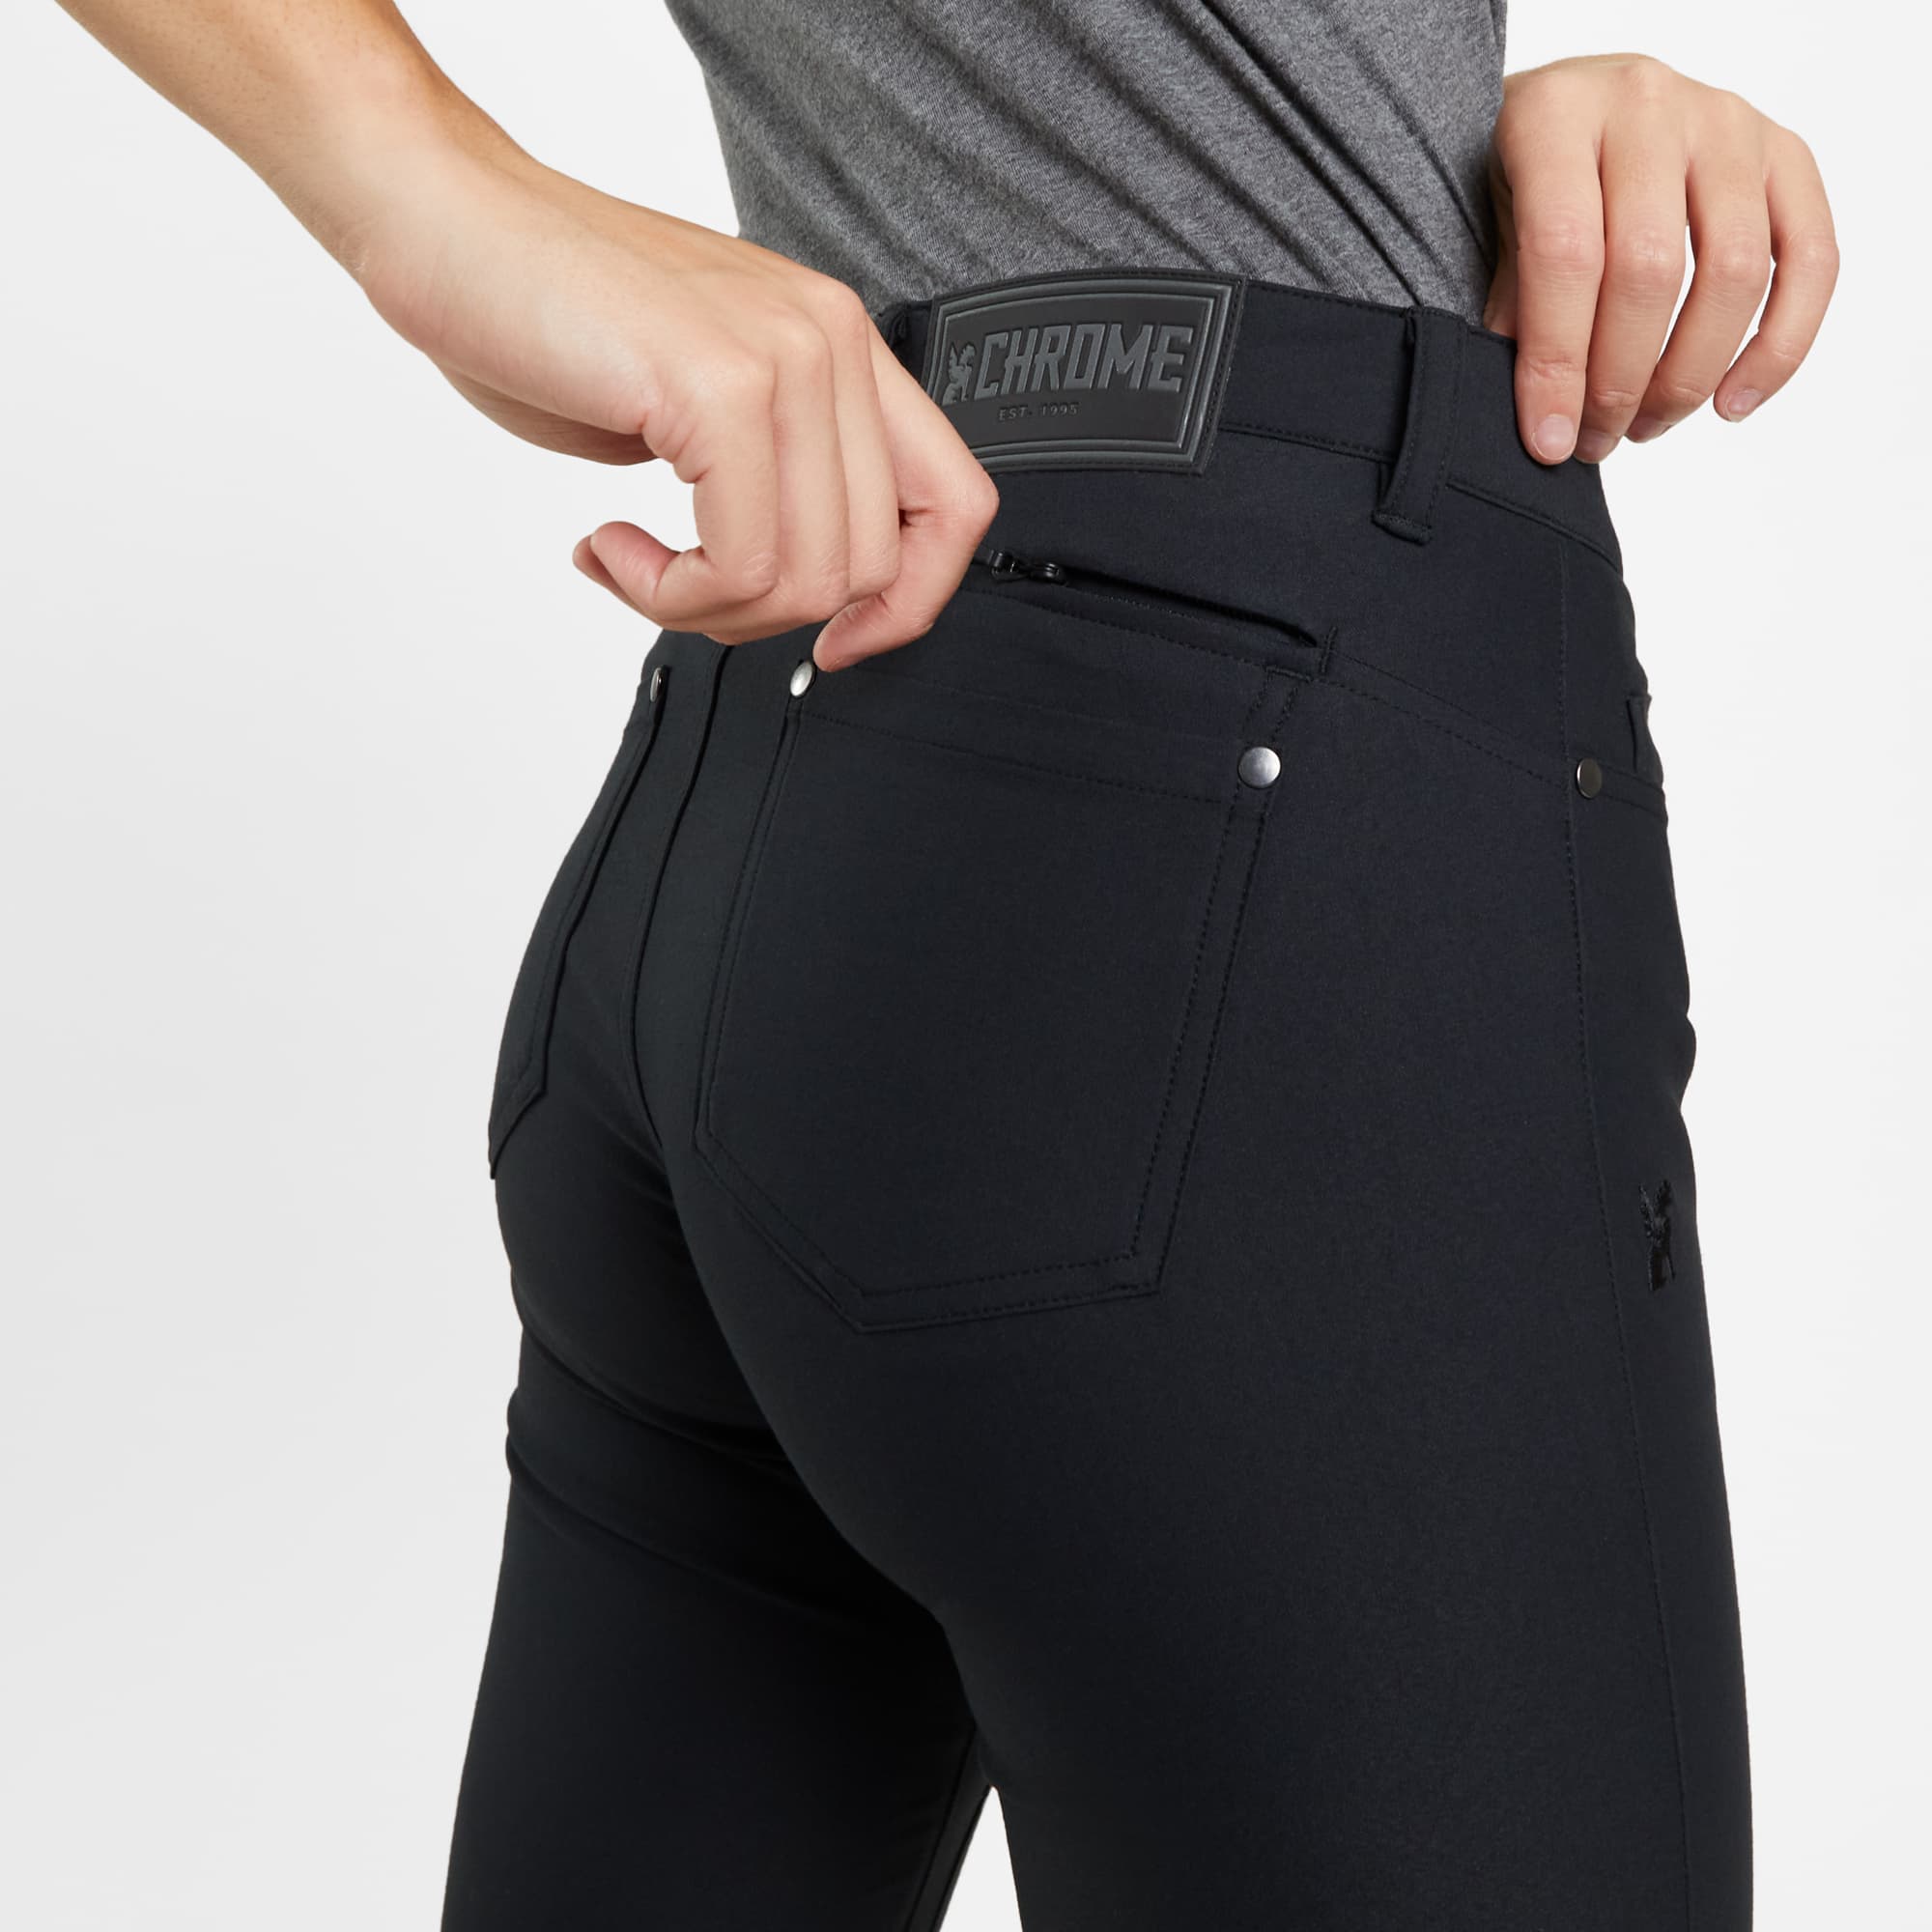 Women's 5 pocket pant in black worn by a woman back detail